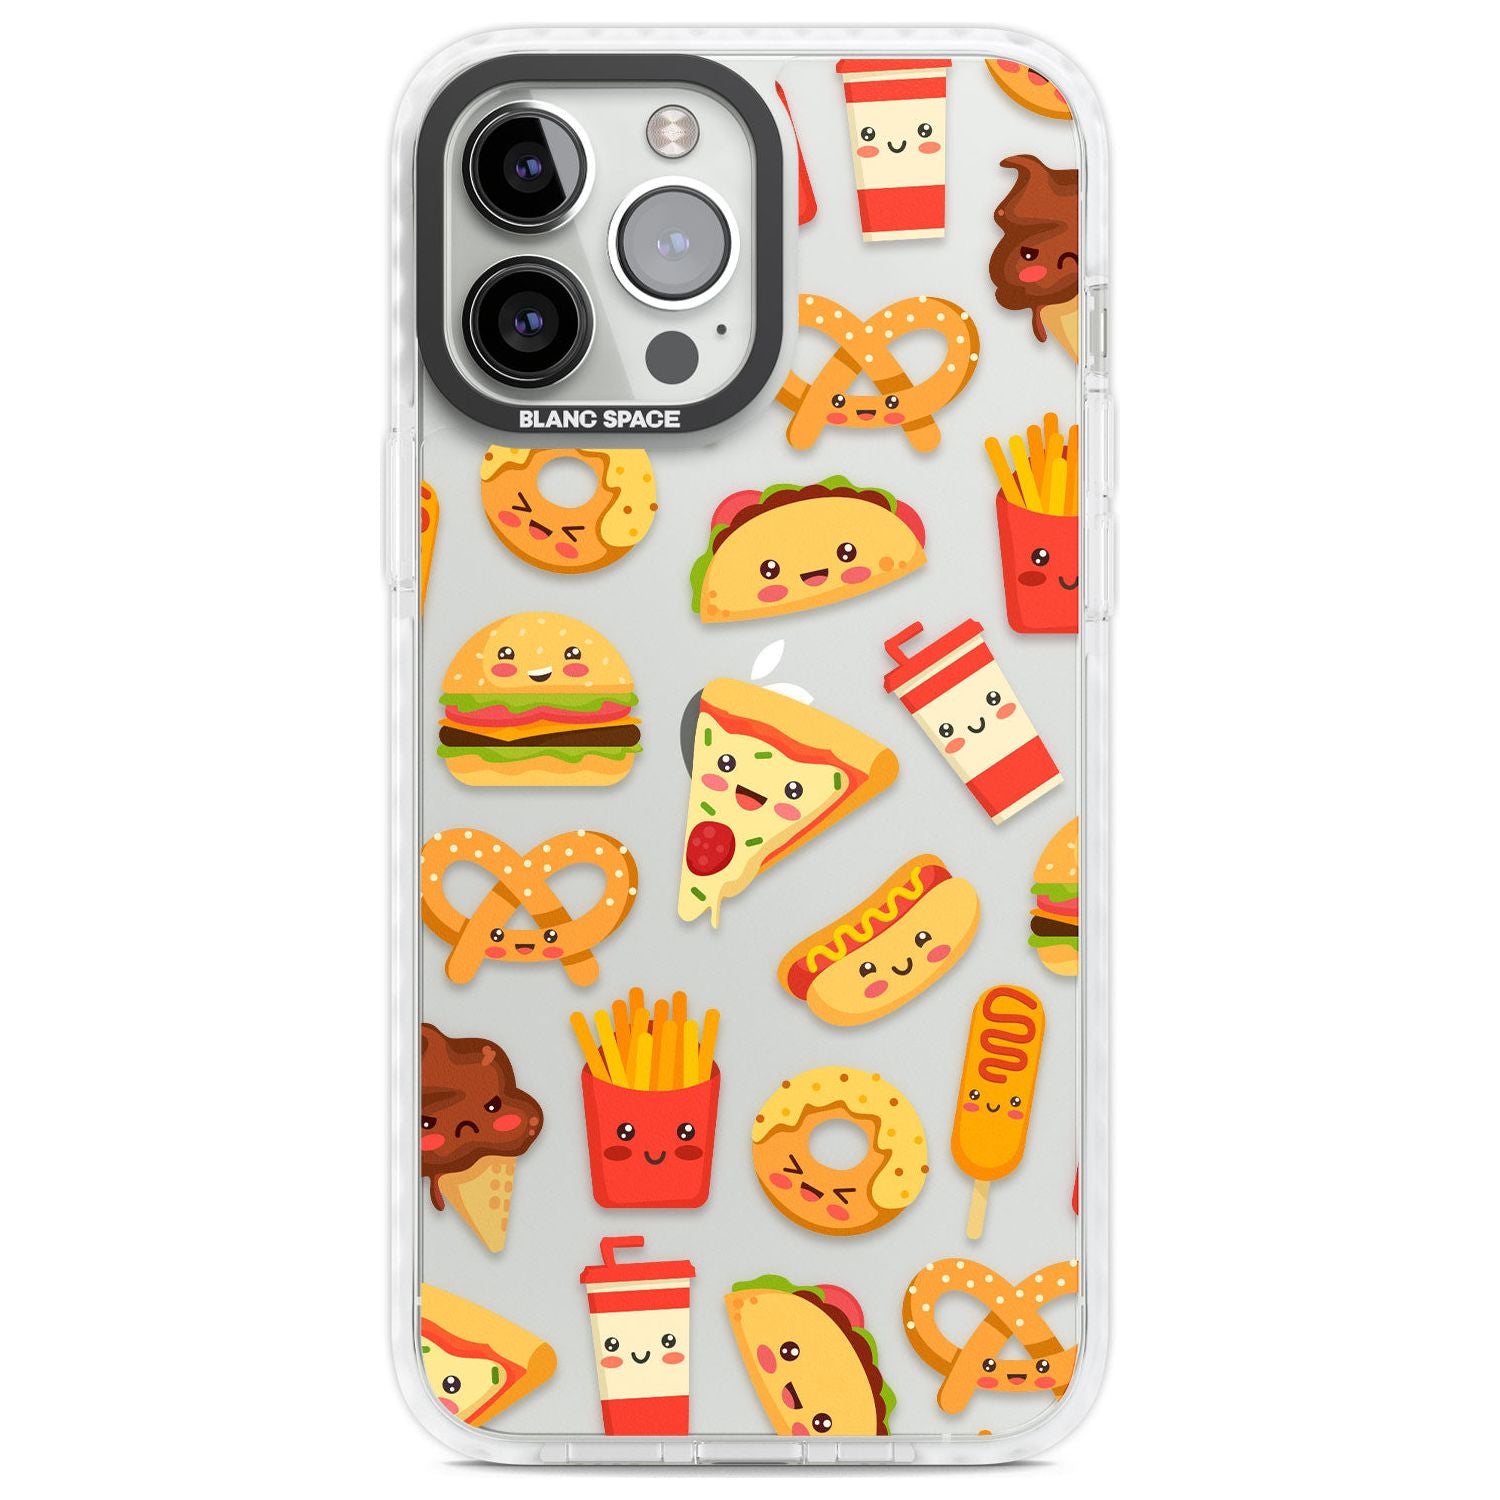 Fast Food Patterns Kawaii Fast Food Mix Phone Case iPhone 13 Pro Max / Impact Case,iPhone 14 Pro Max / Impact Case Blanc Space